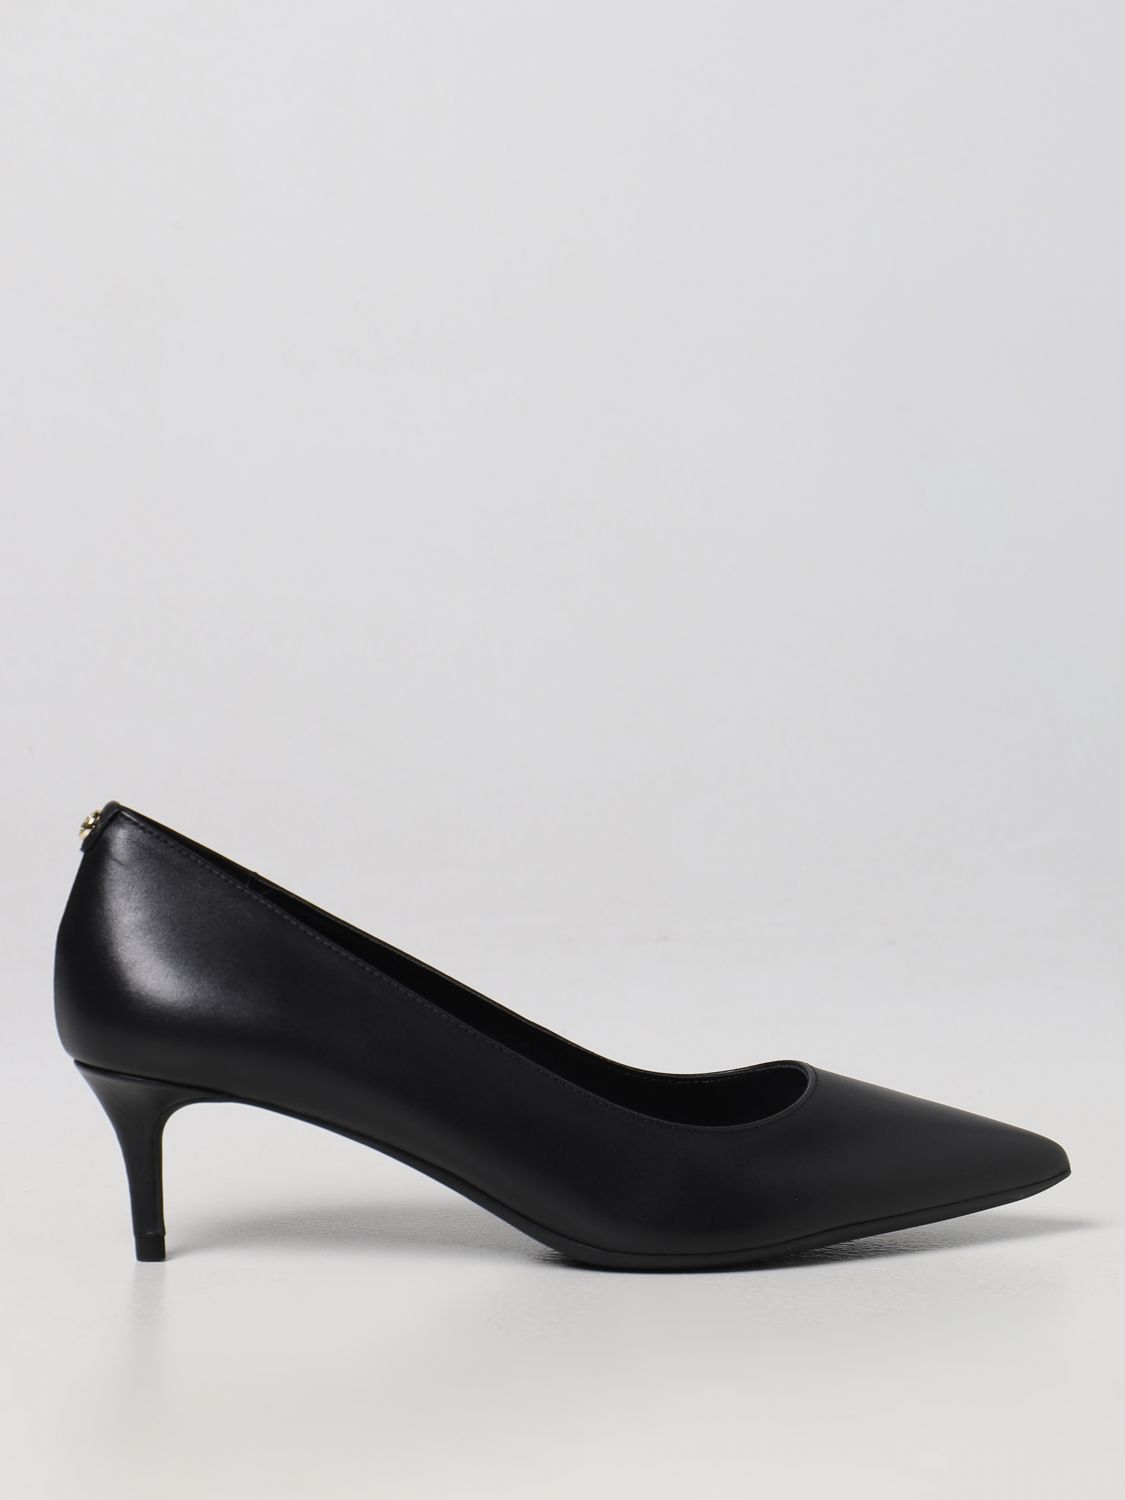 Michael Kors heel shoes for woman - Black | Michael Kors high heel shoes 40FOSAMP1L online on GIGLIO.COM